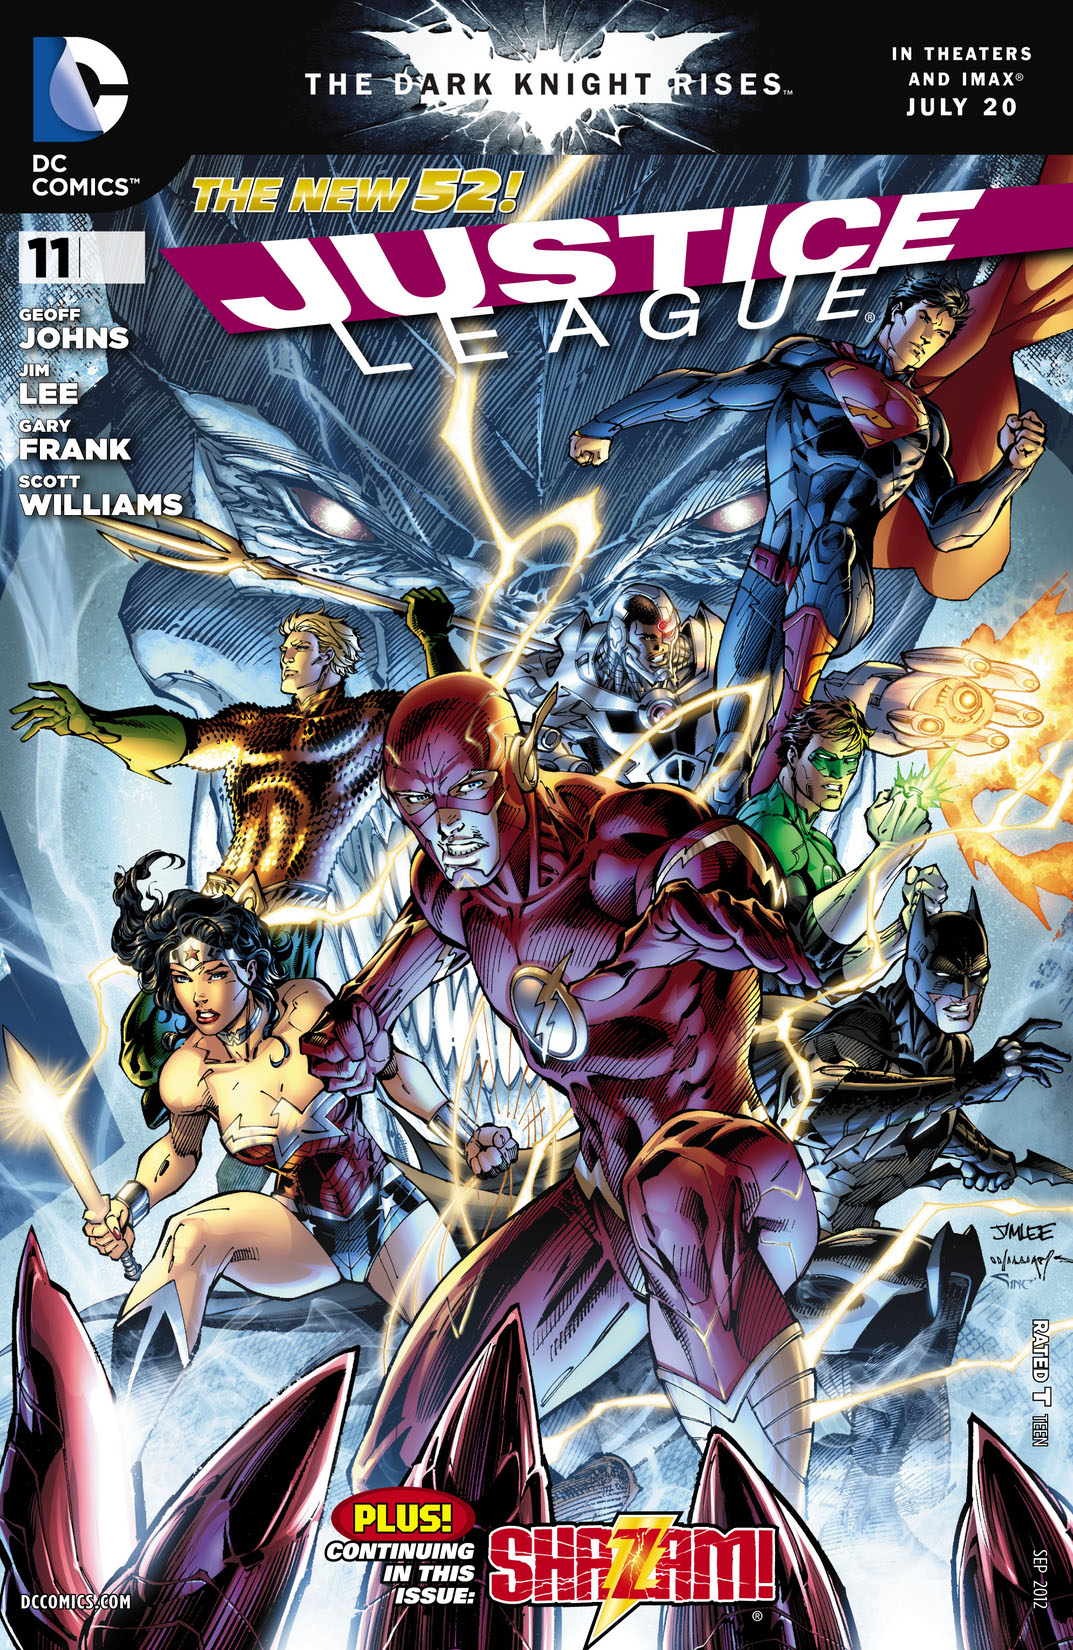 Justice League (2011-) #11 preview images